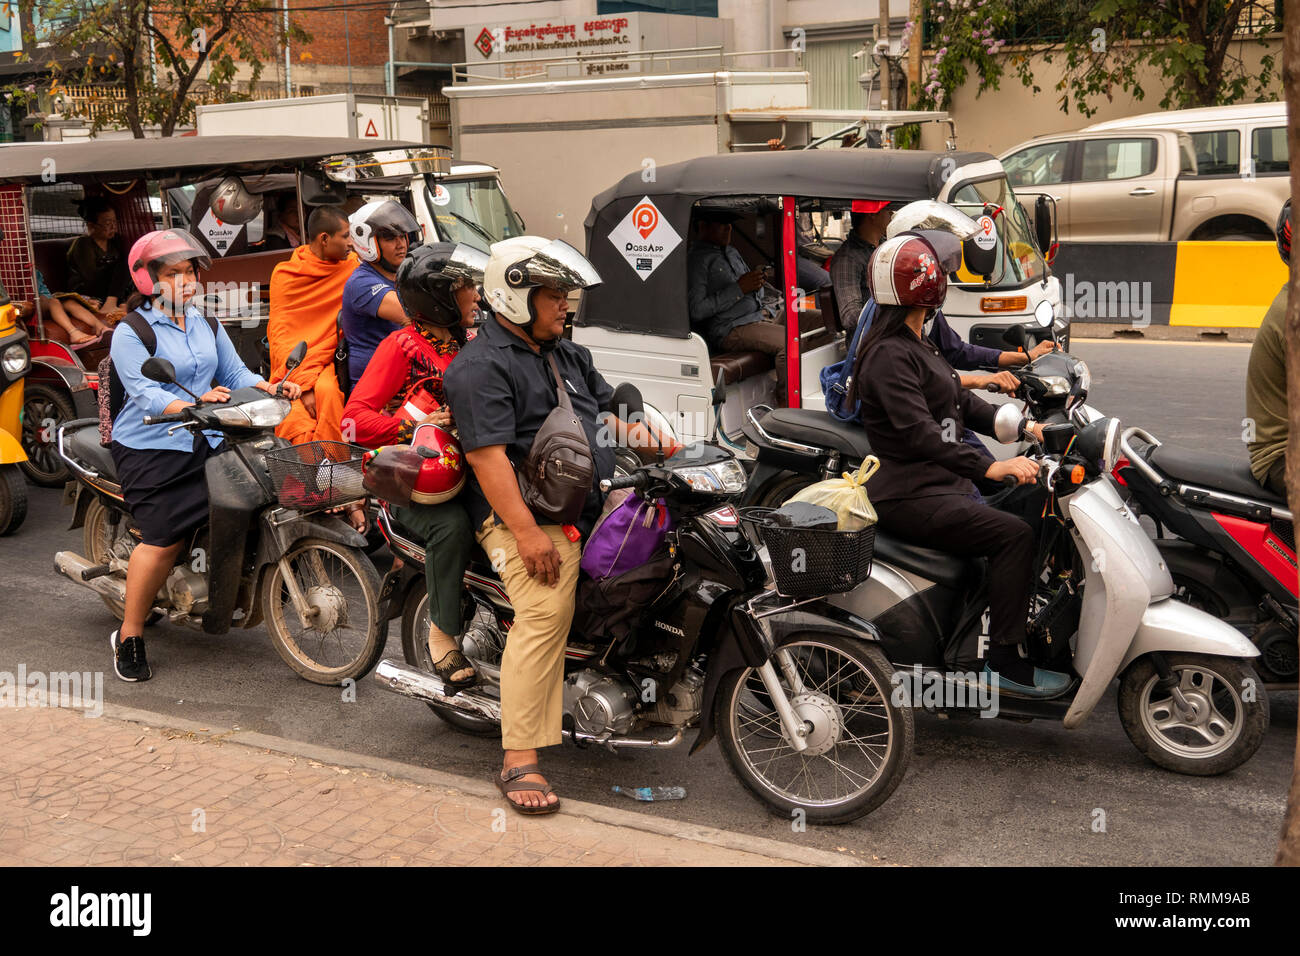 Cambodia, Phnom Penh, traffic congestion on city centre roads, motorcycles and tuk tuks amongst cars Stock Photo